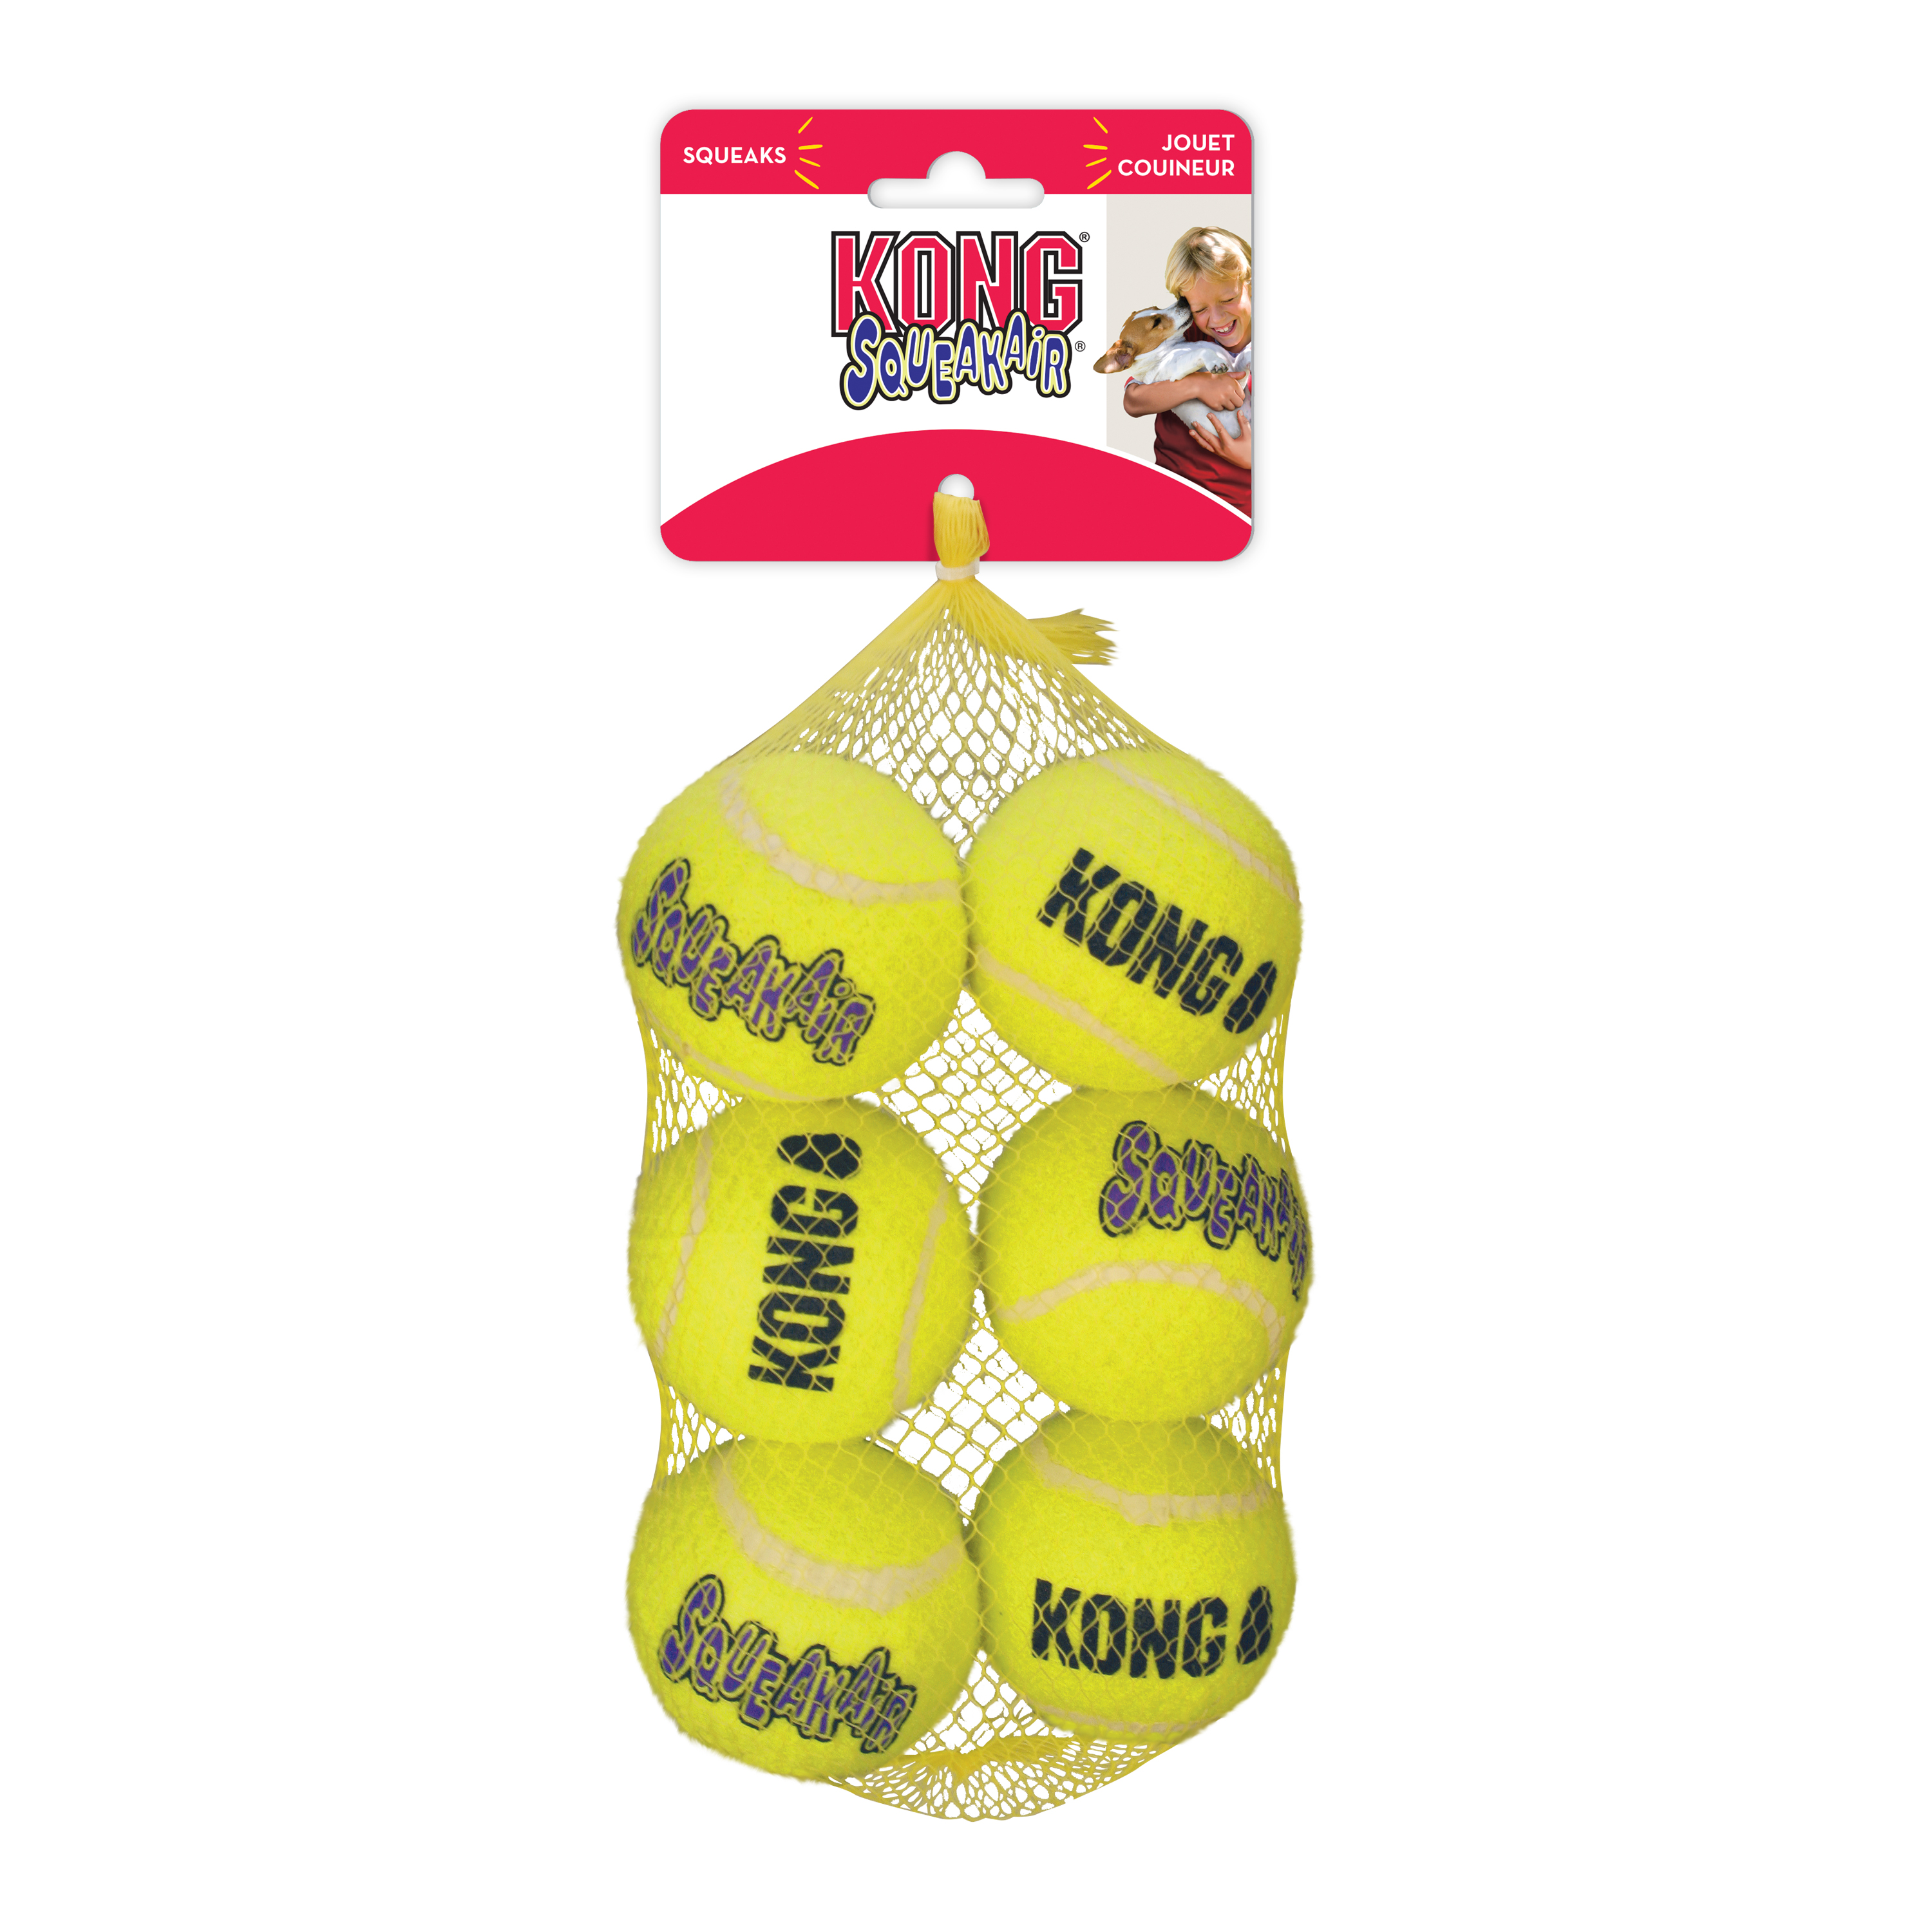 Kong squeakair balls 6-pack geel - Product shot